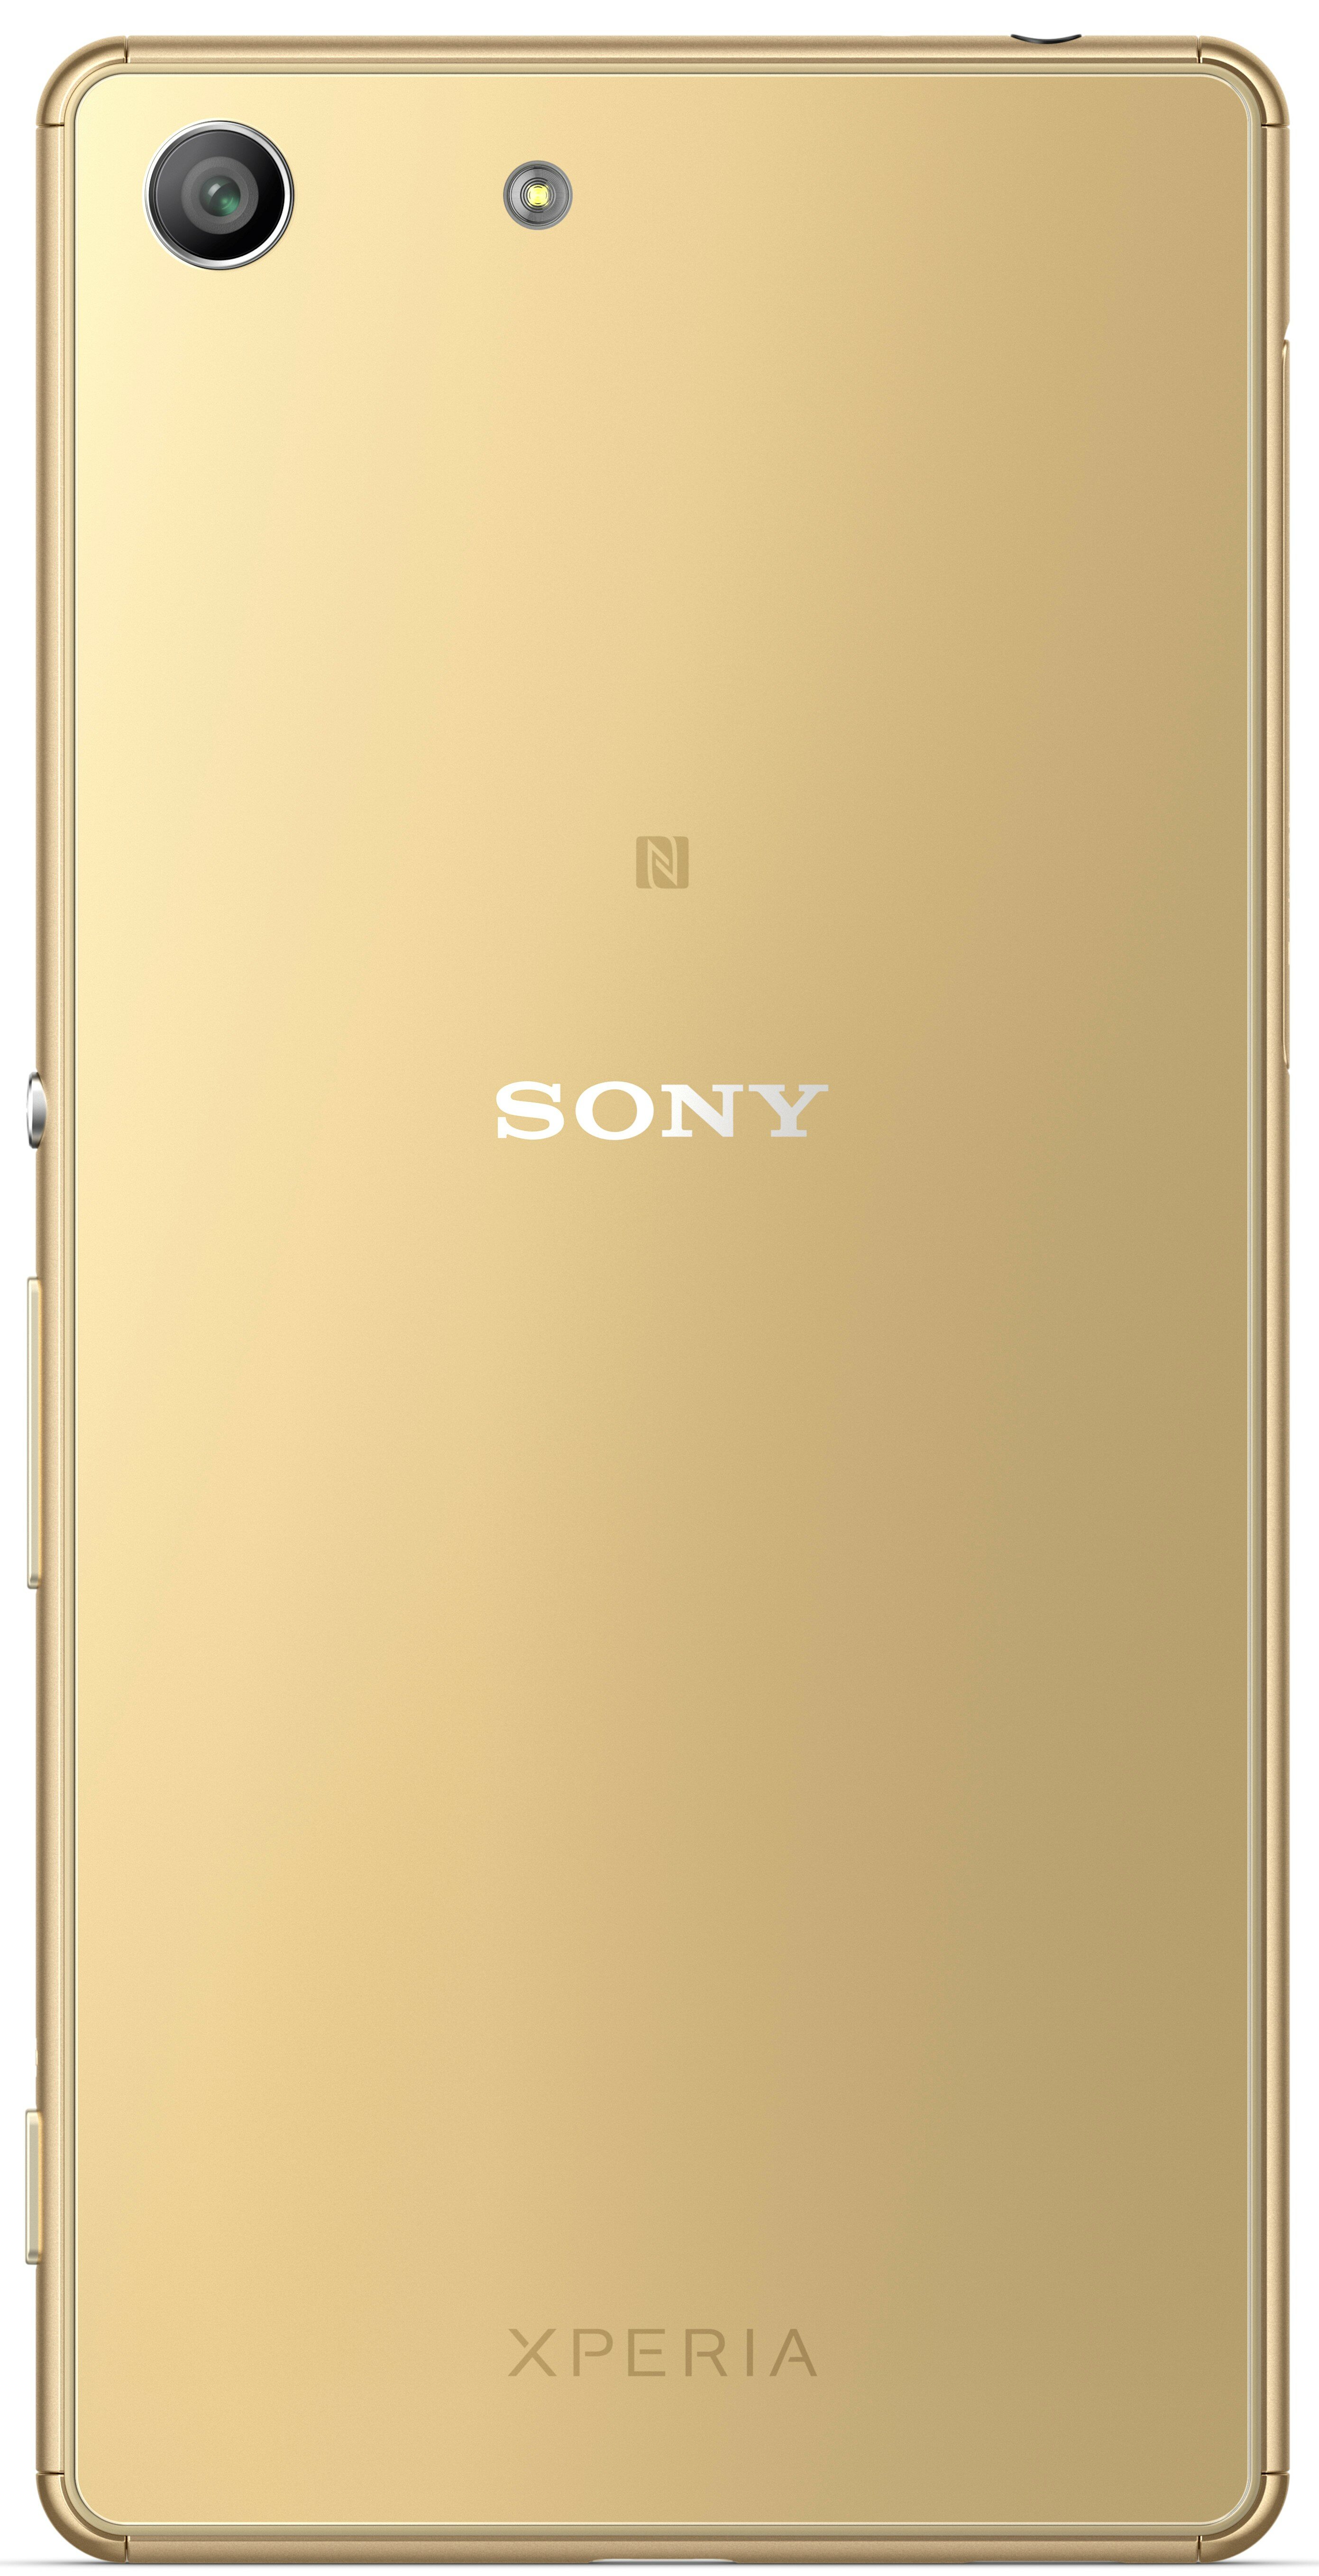 Sony XPERIA Telephone M5 Gold 16GB / 3GB - E5633 Gold